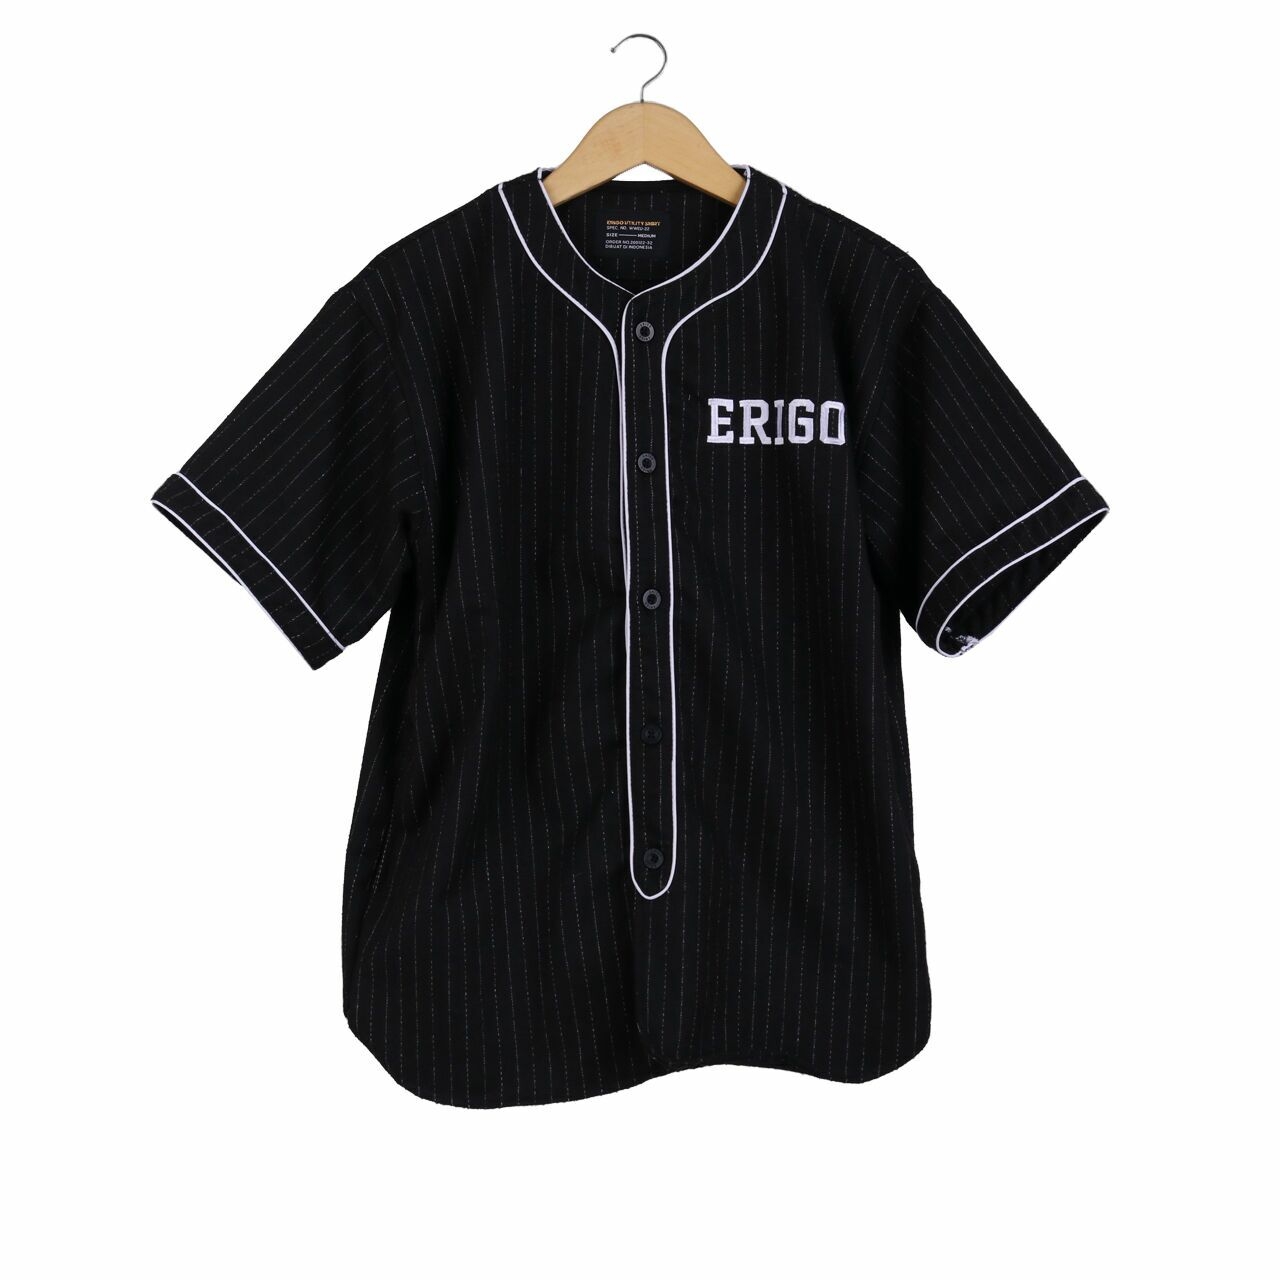 Erigo Black Unisex Baseball Shirt	